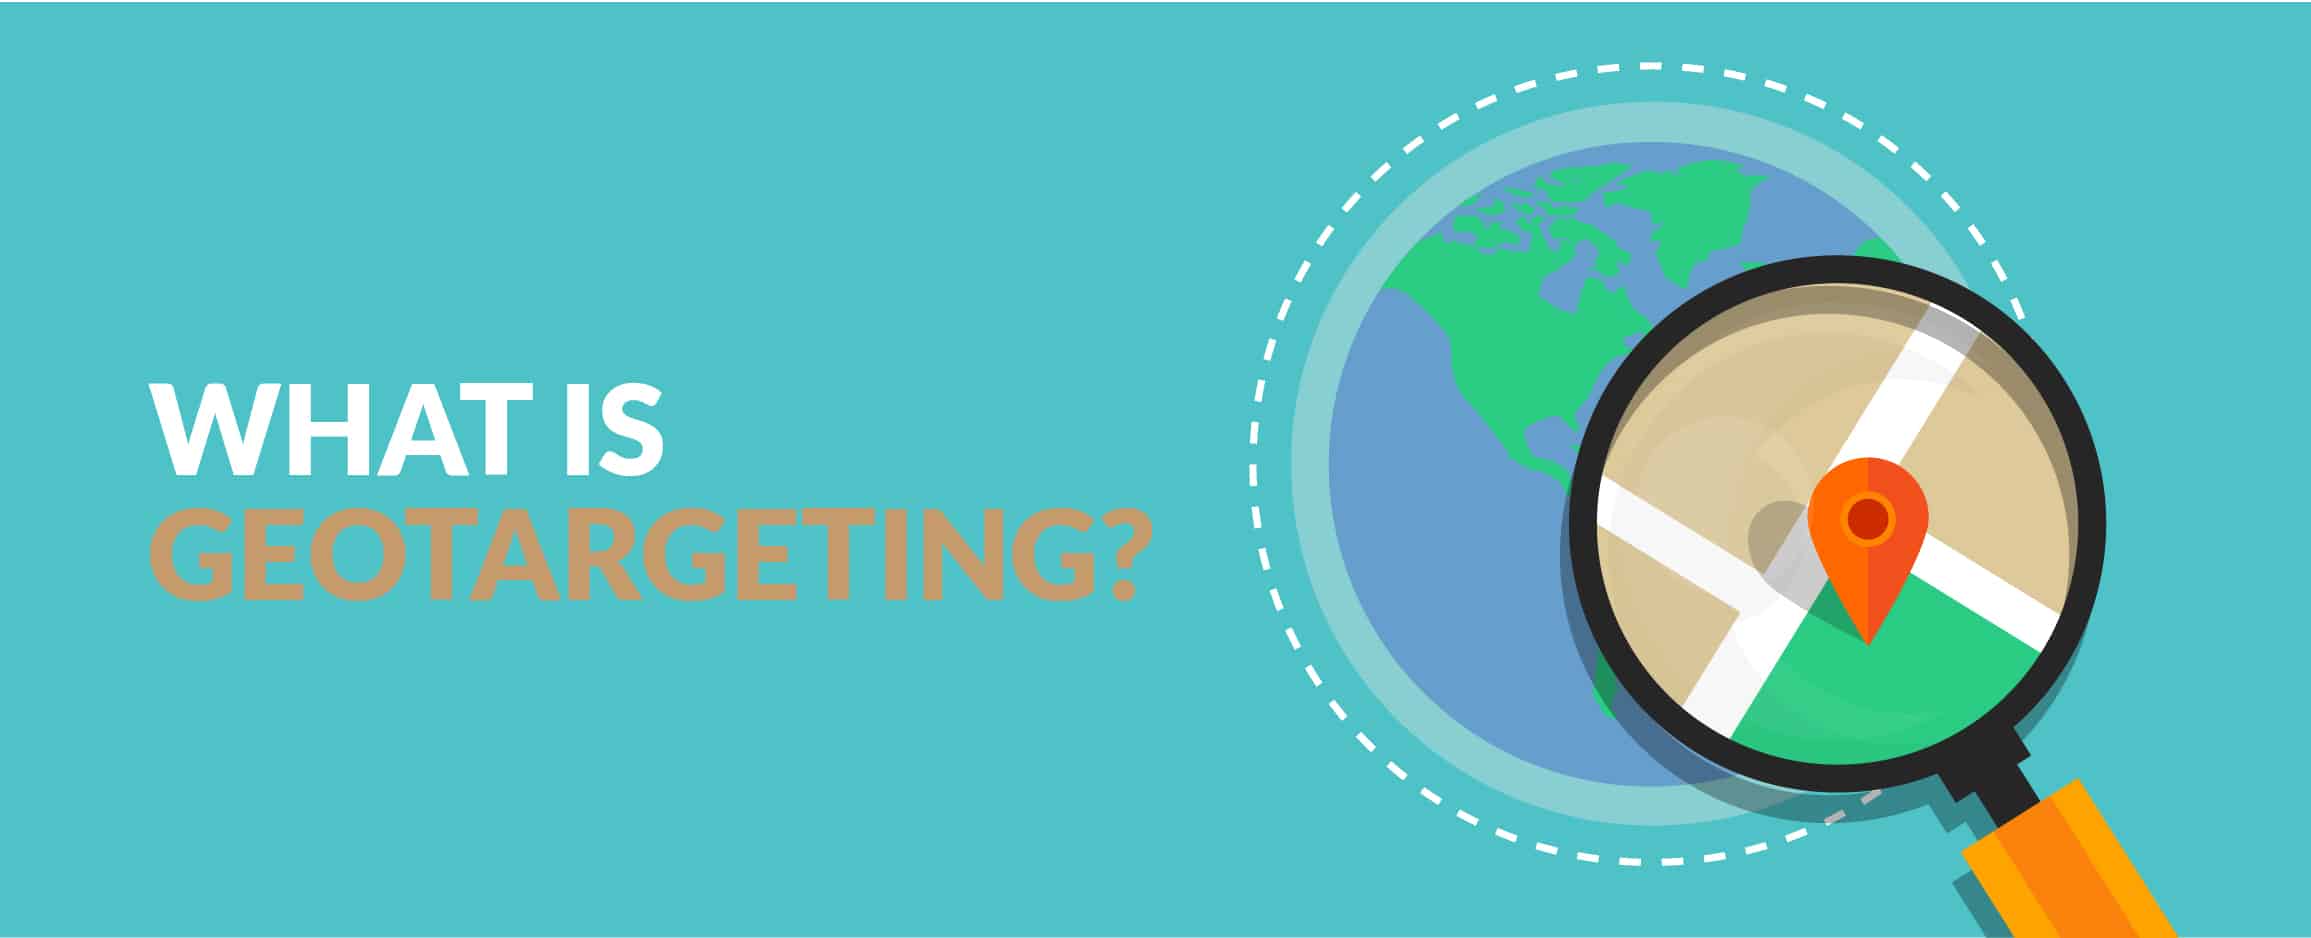 What is geotargeting? 